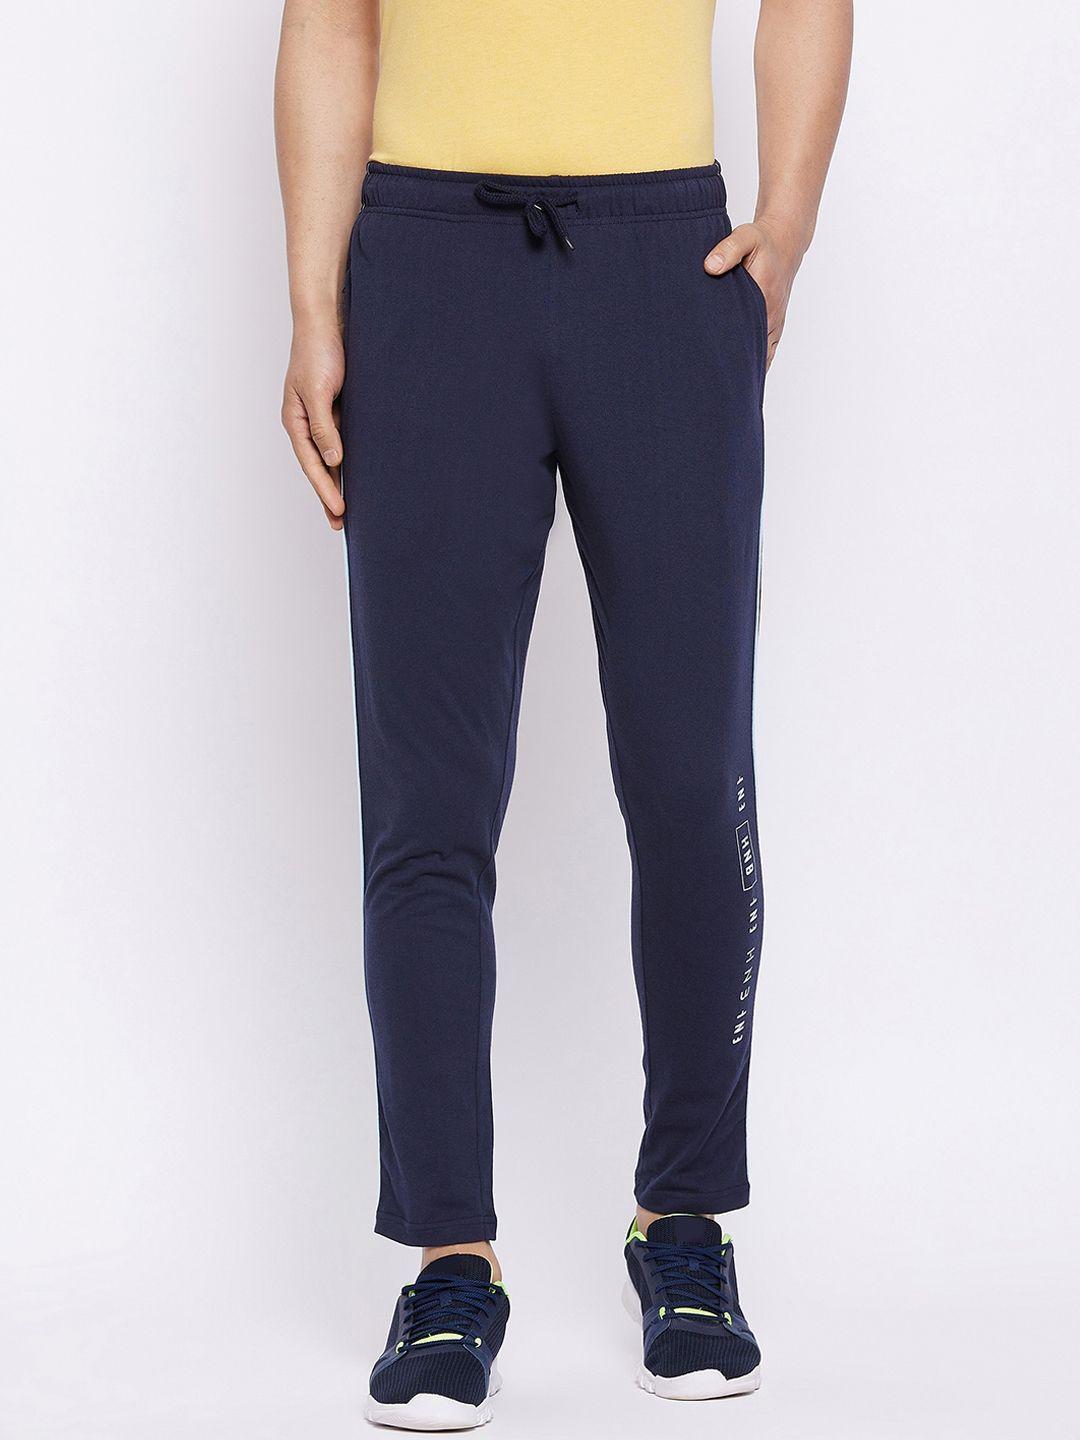 harbornbay-men-navy-blue--solid-cotton-track-pants